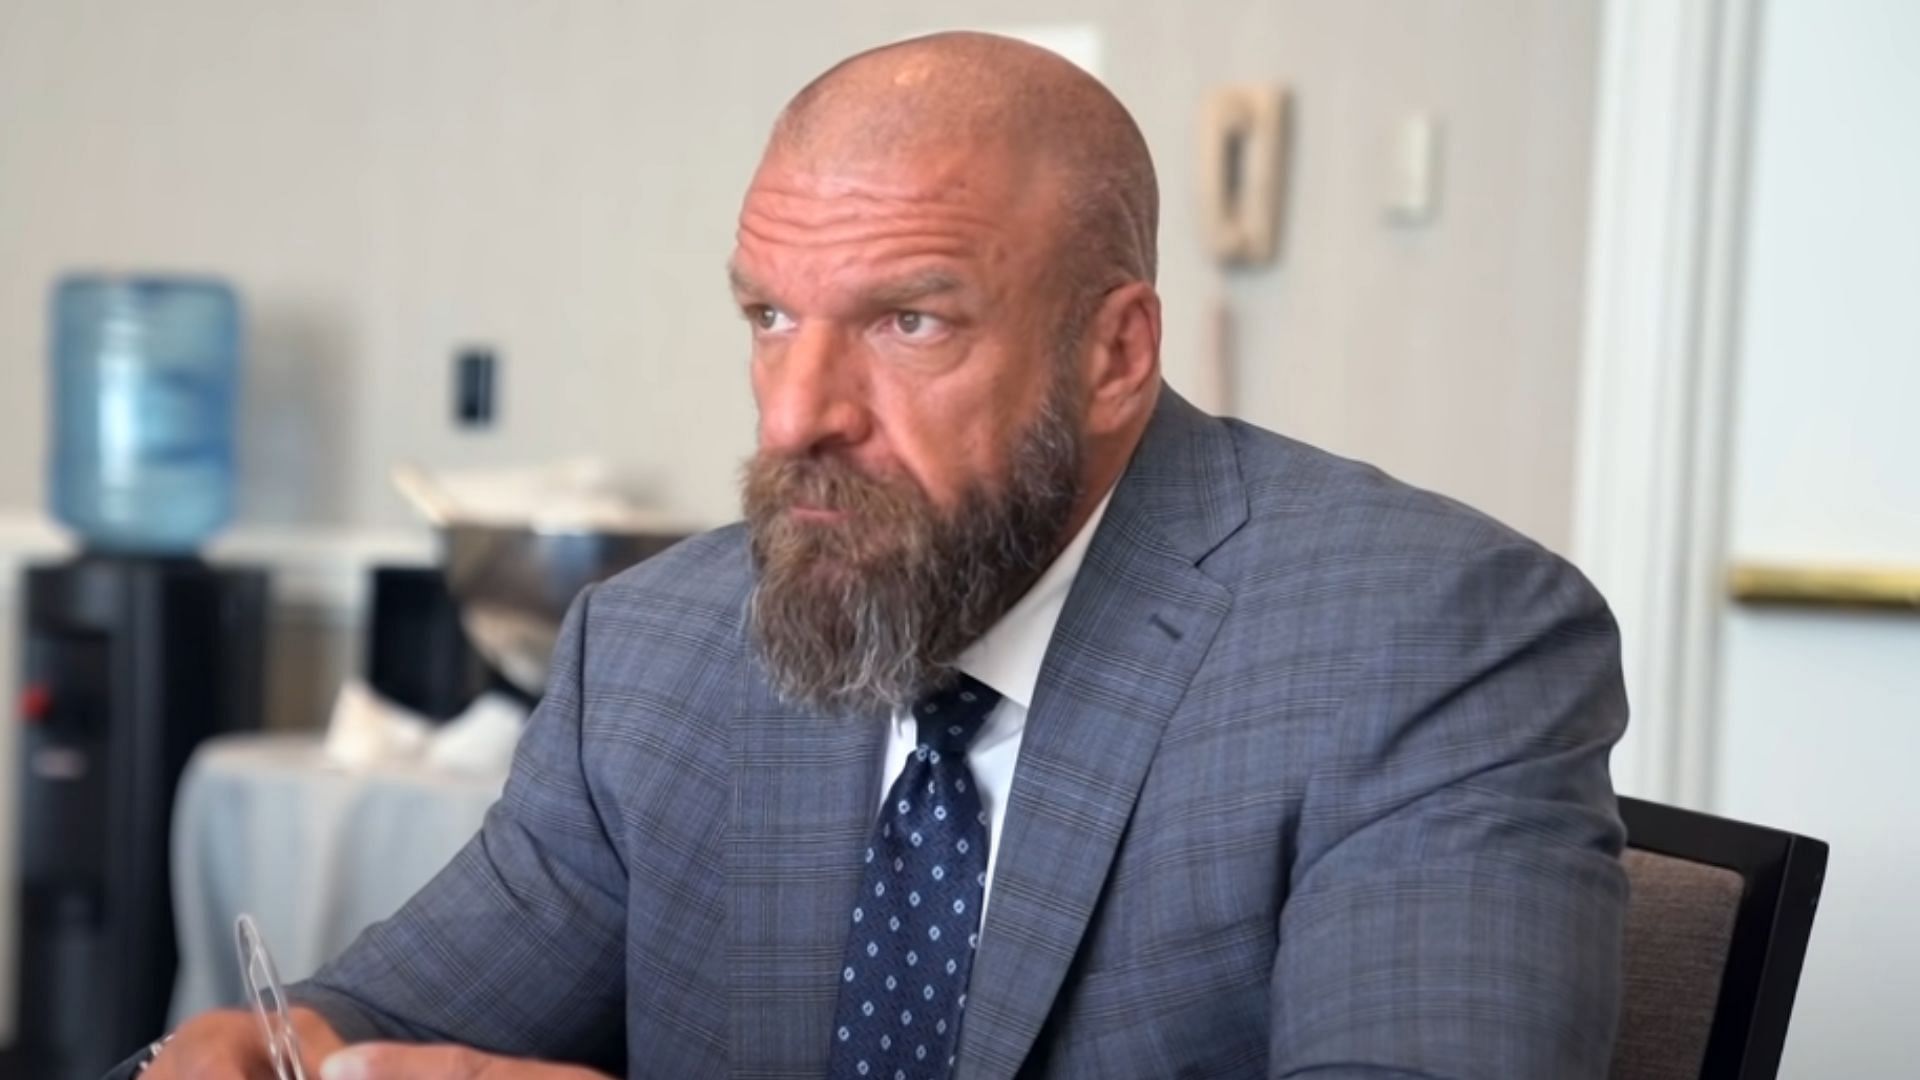 Triple H is the head booker of WWE